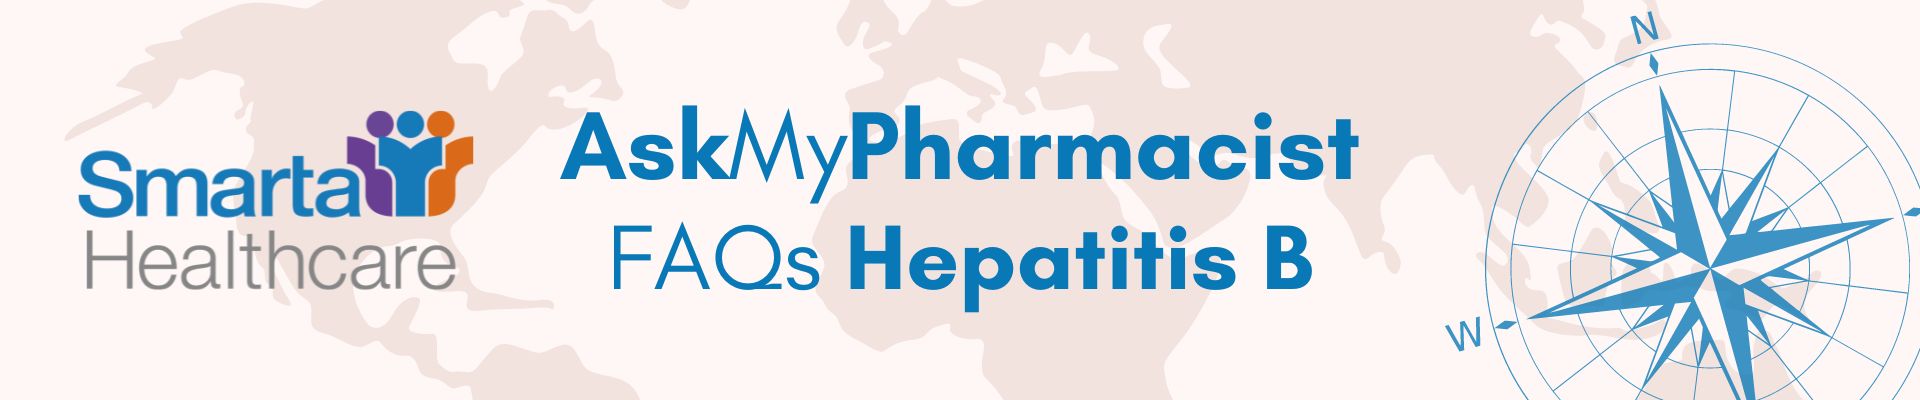 Smarta Healthcare AskMyPharmacist FAQs Hepatitis B Vaccine